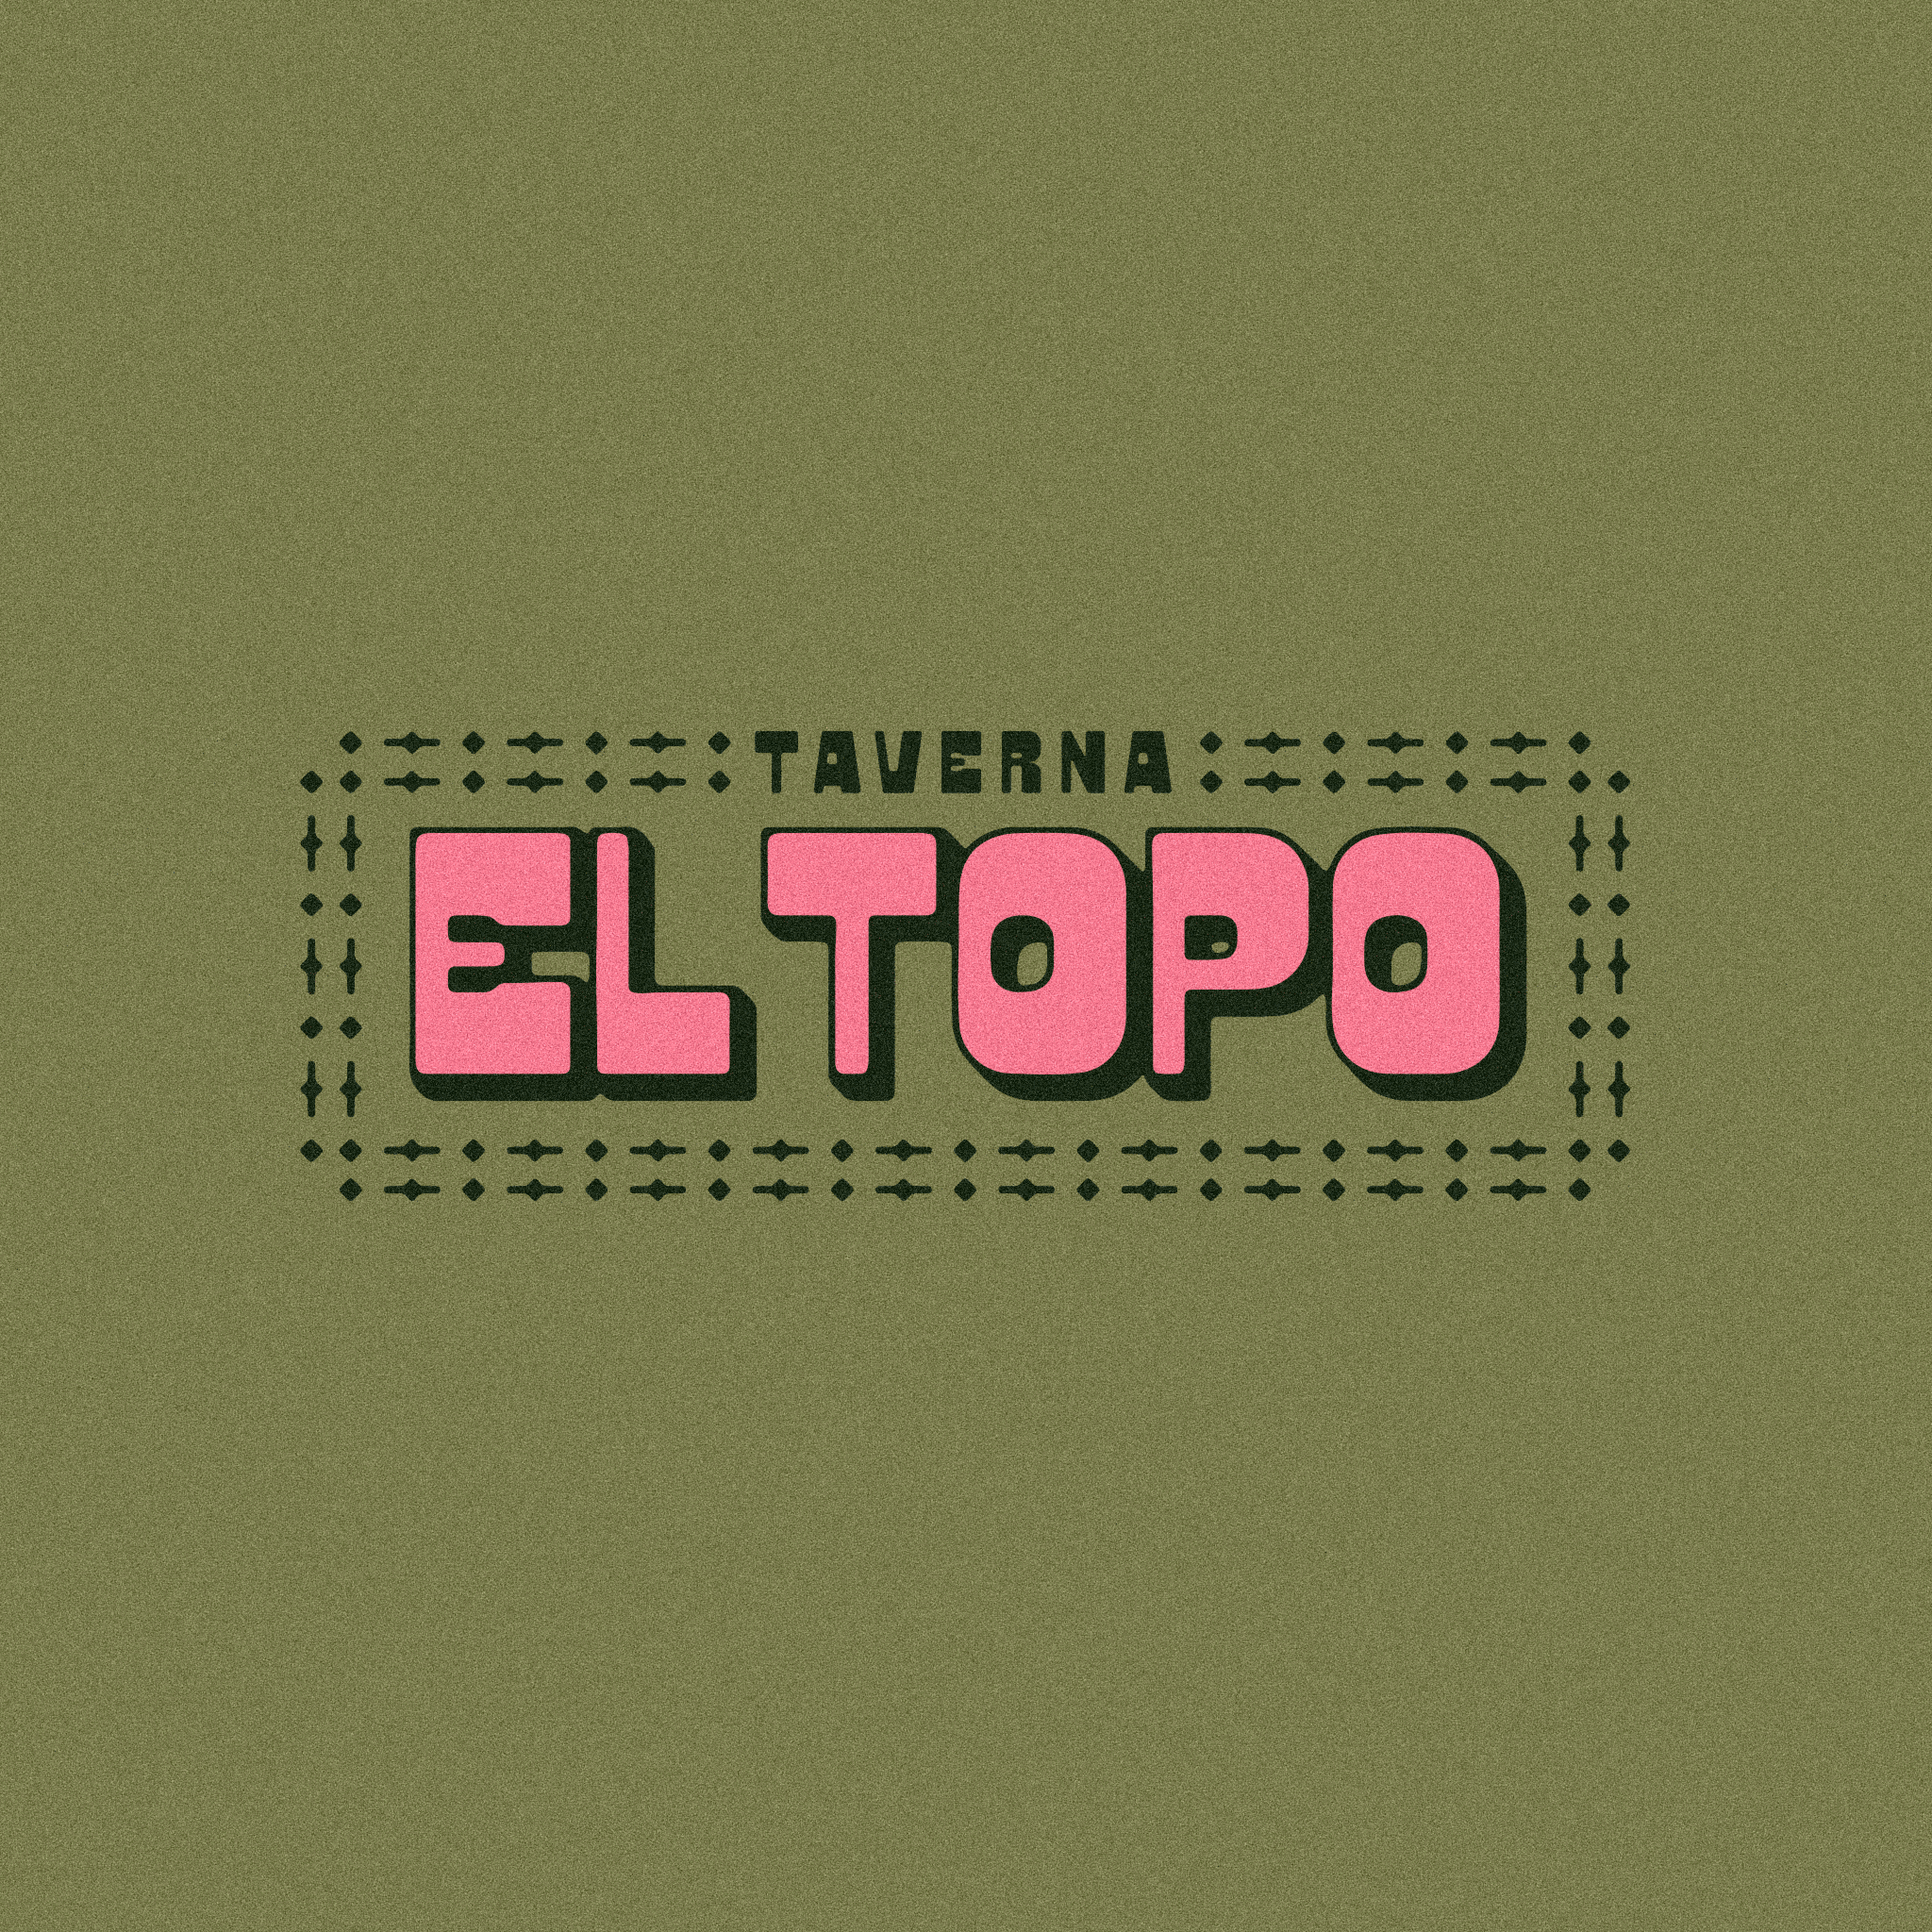 Taverna El Topo — Brand Identity brand identity el topo identity jodorowsky mexico city branding new retro tavern tavern branding